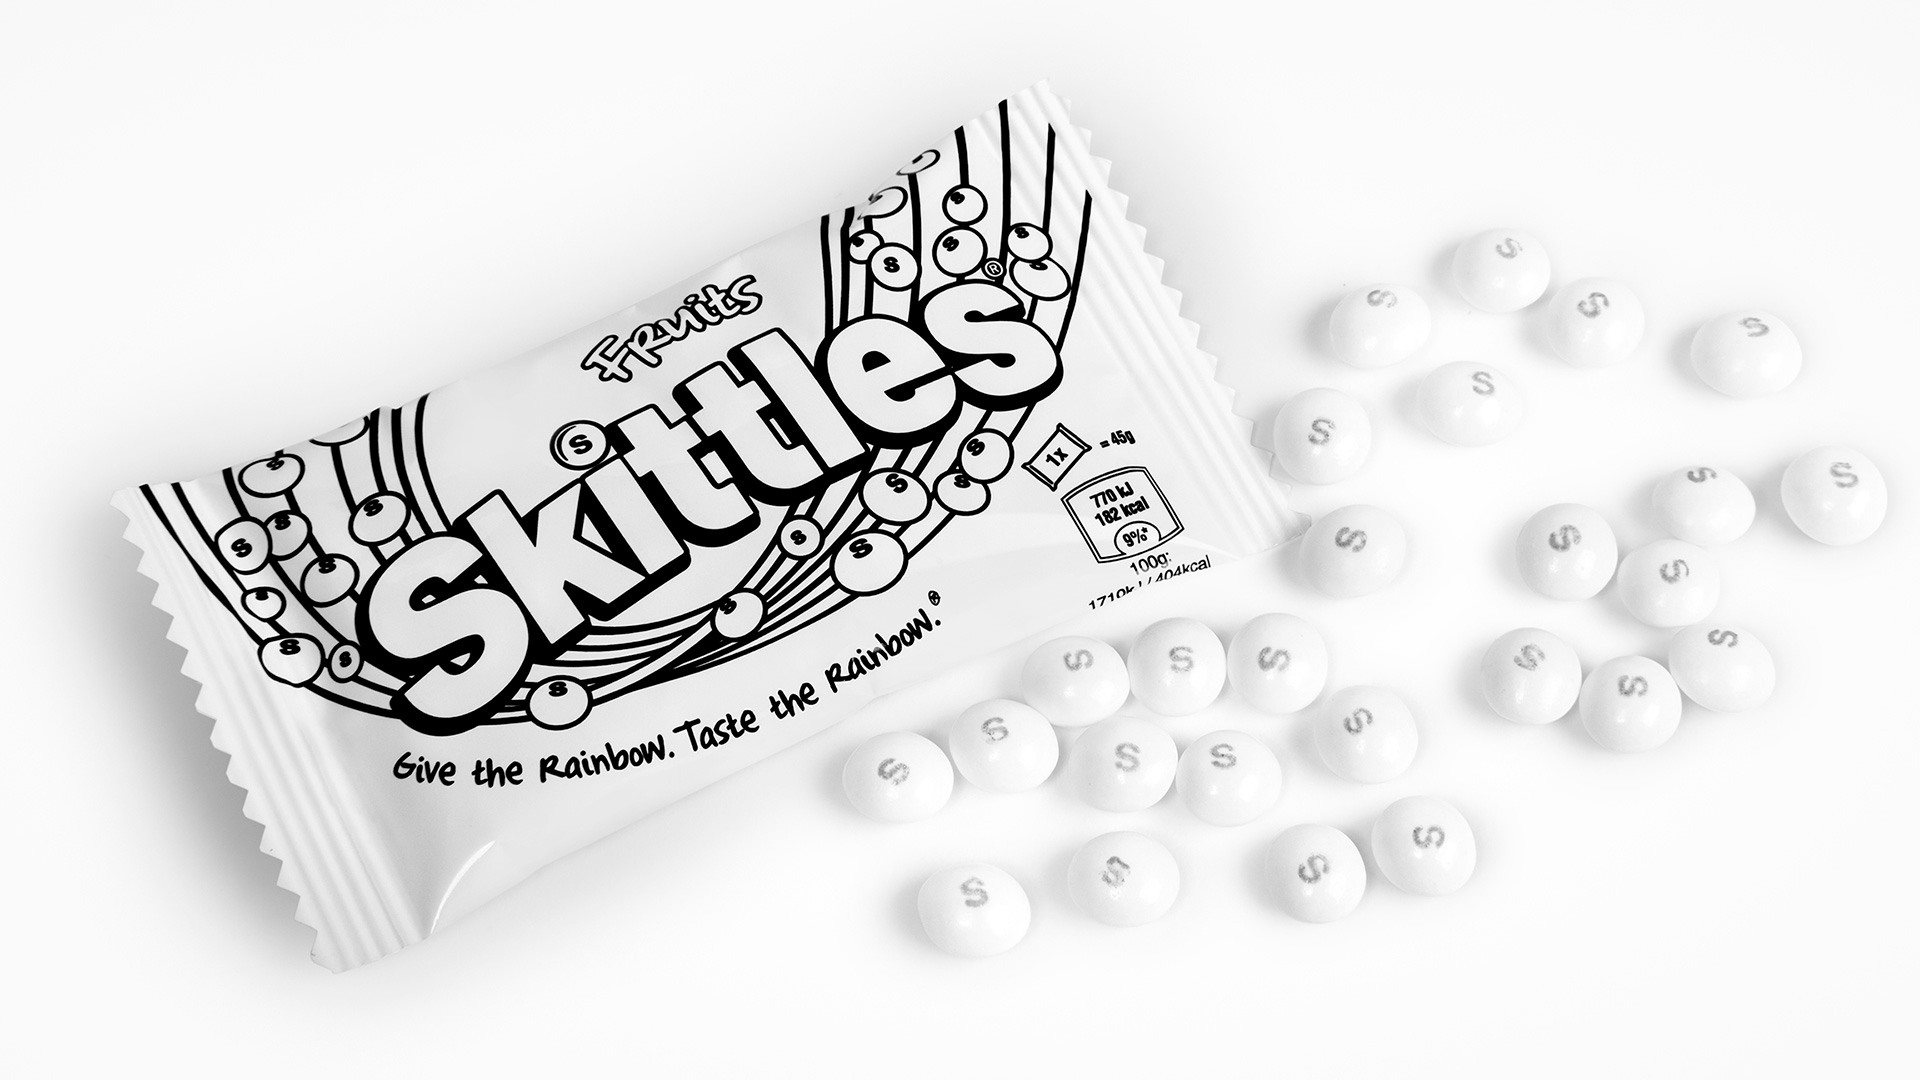 Skittles Pride campaign